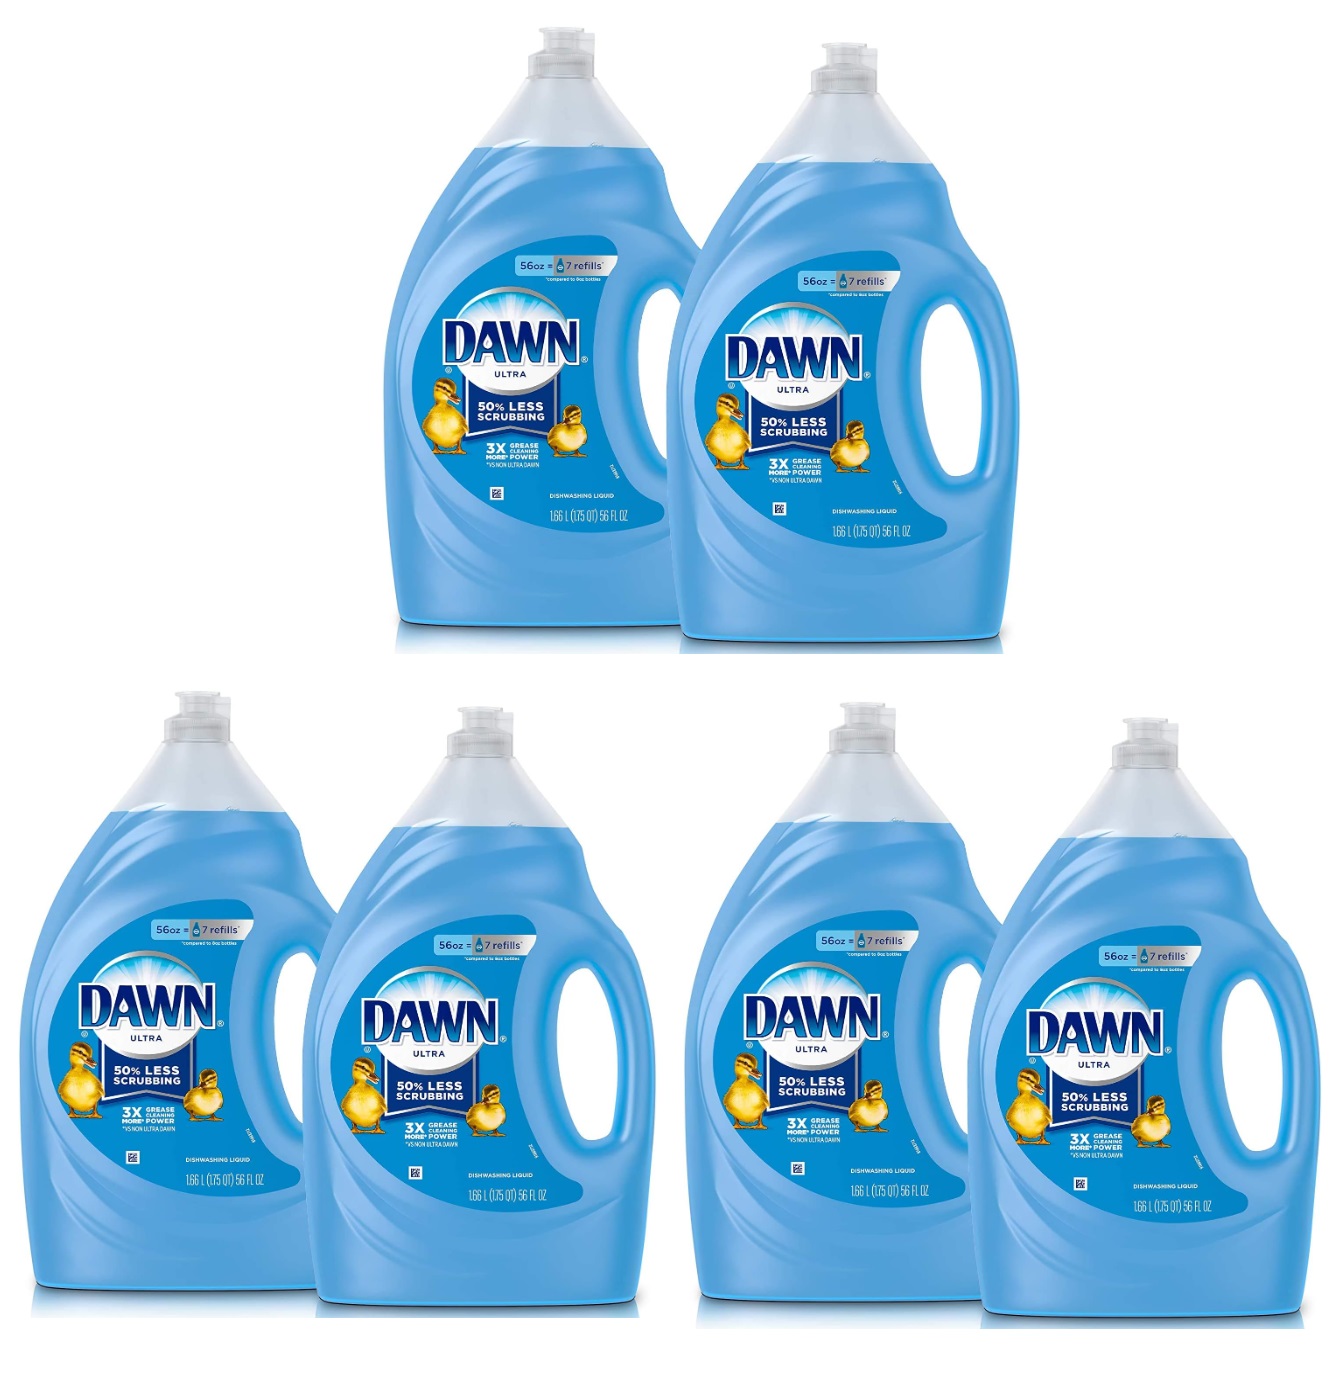 2-Pack 56-Oz. Dawn Ultra Dishwashing Liquid Soap (Original Scent) 3 for $33.12 ($11.04 each) w/ S&S + Free Shipping